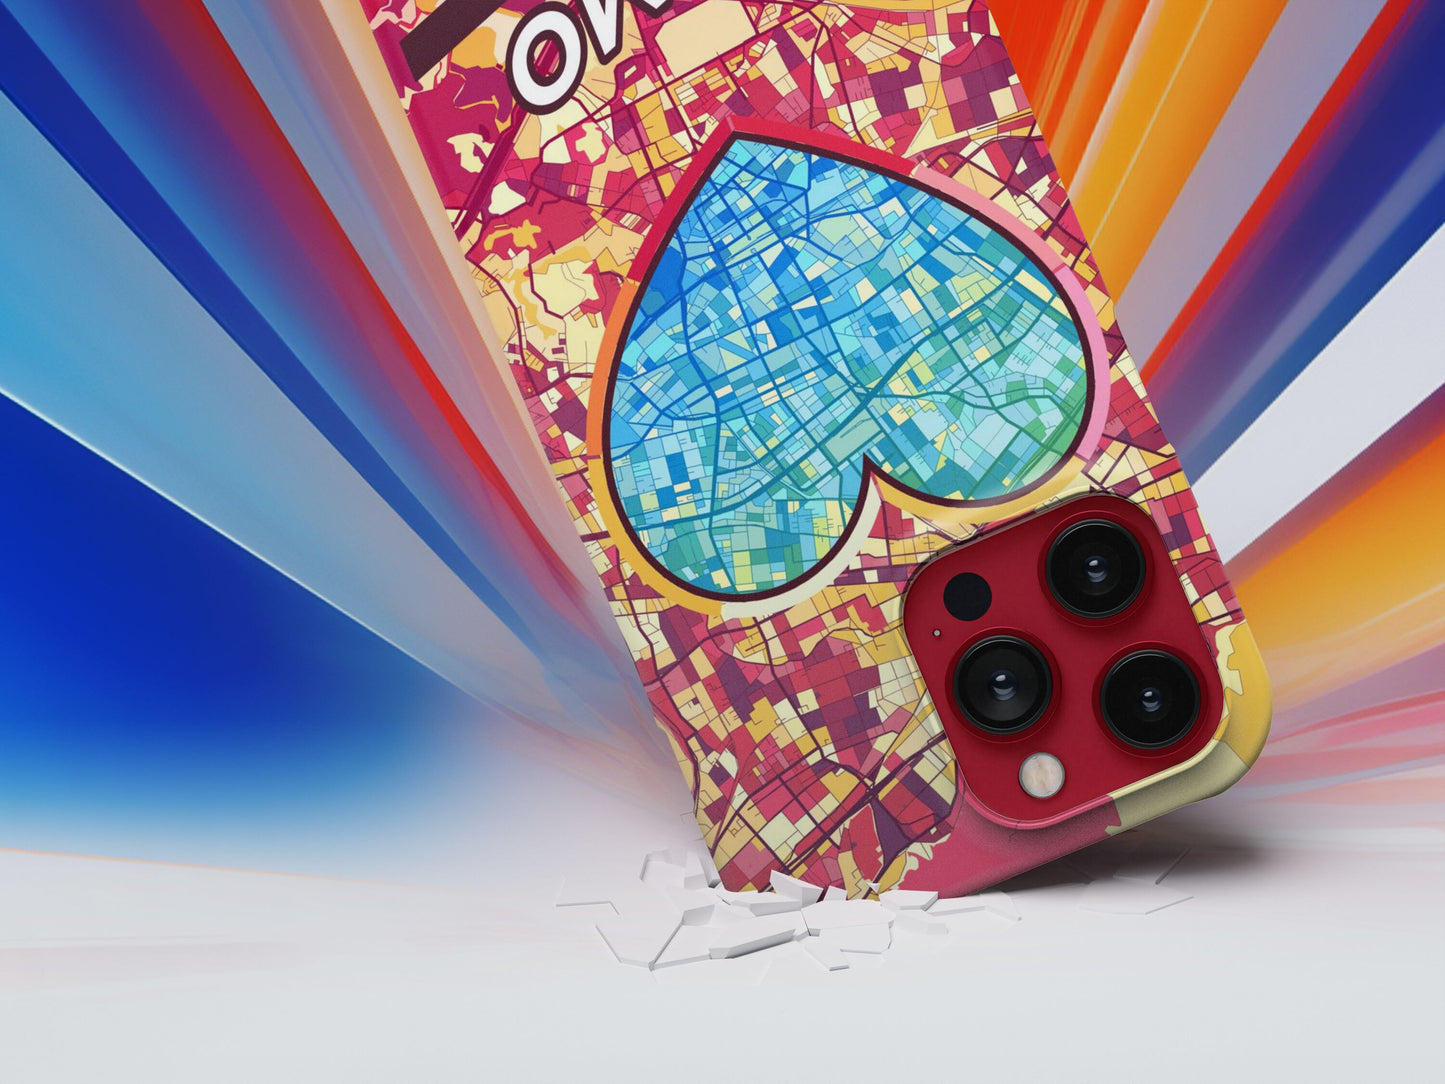 Izumo Japan slim phone case with colorful icon. Birthday, wedding or housewarming gift. Couple match cases.